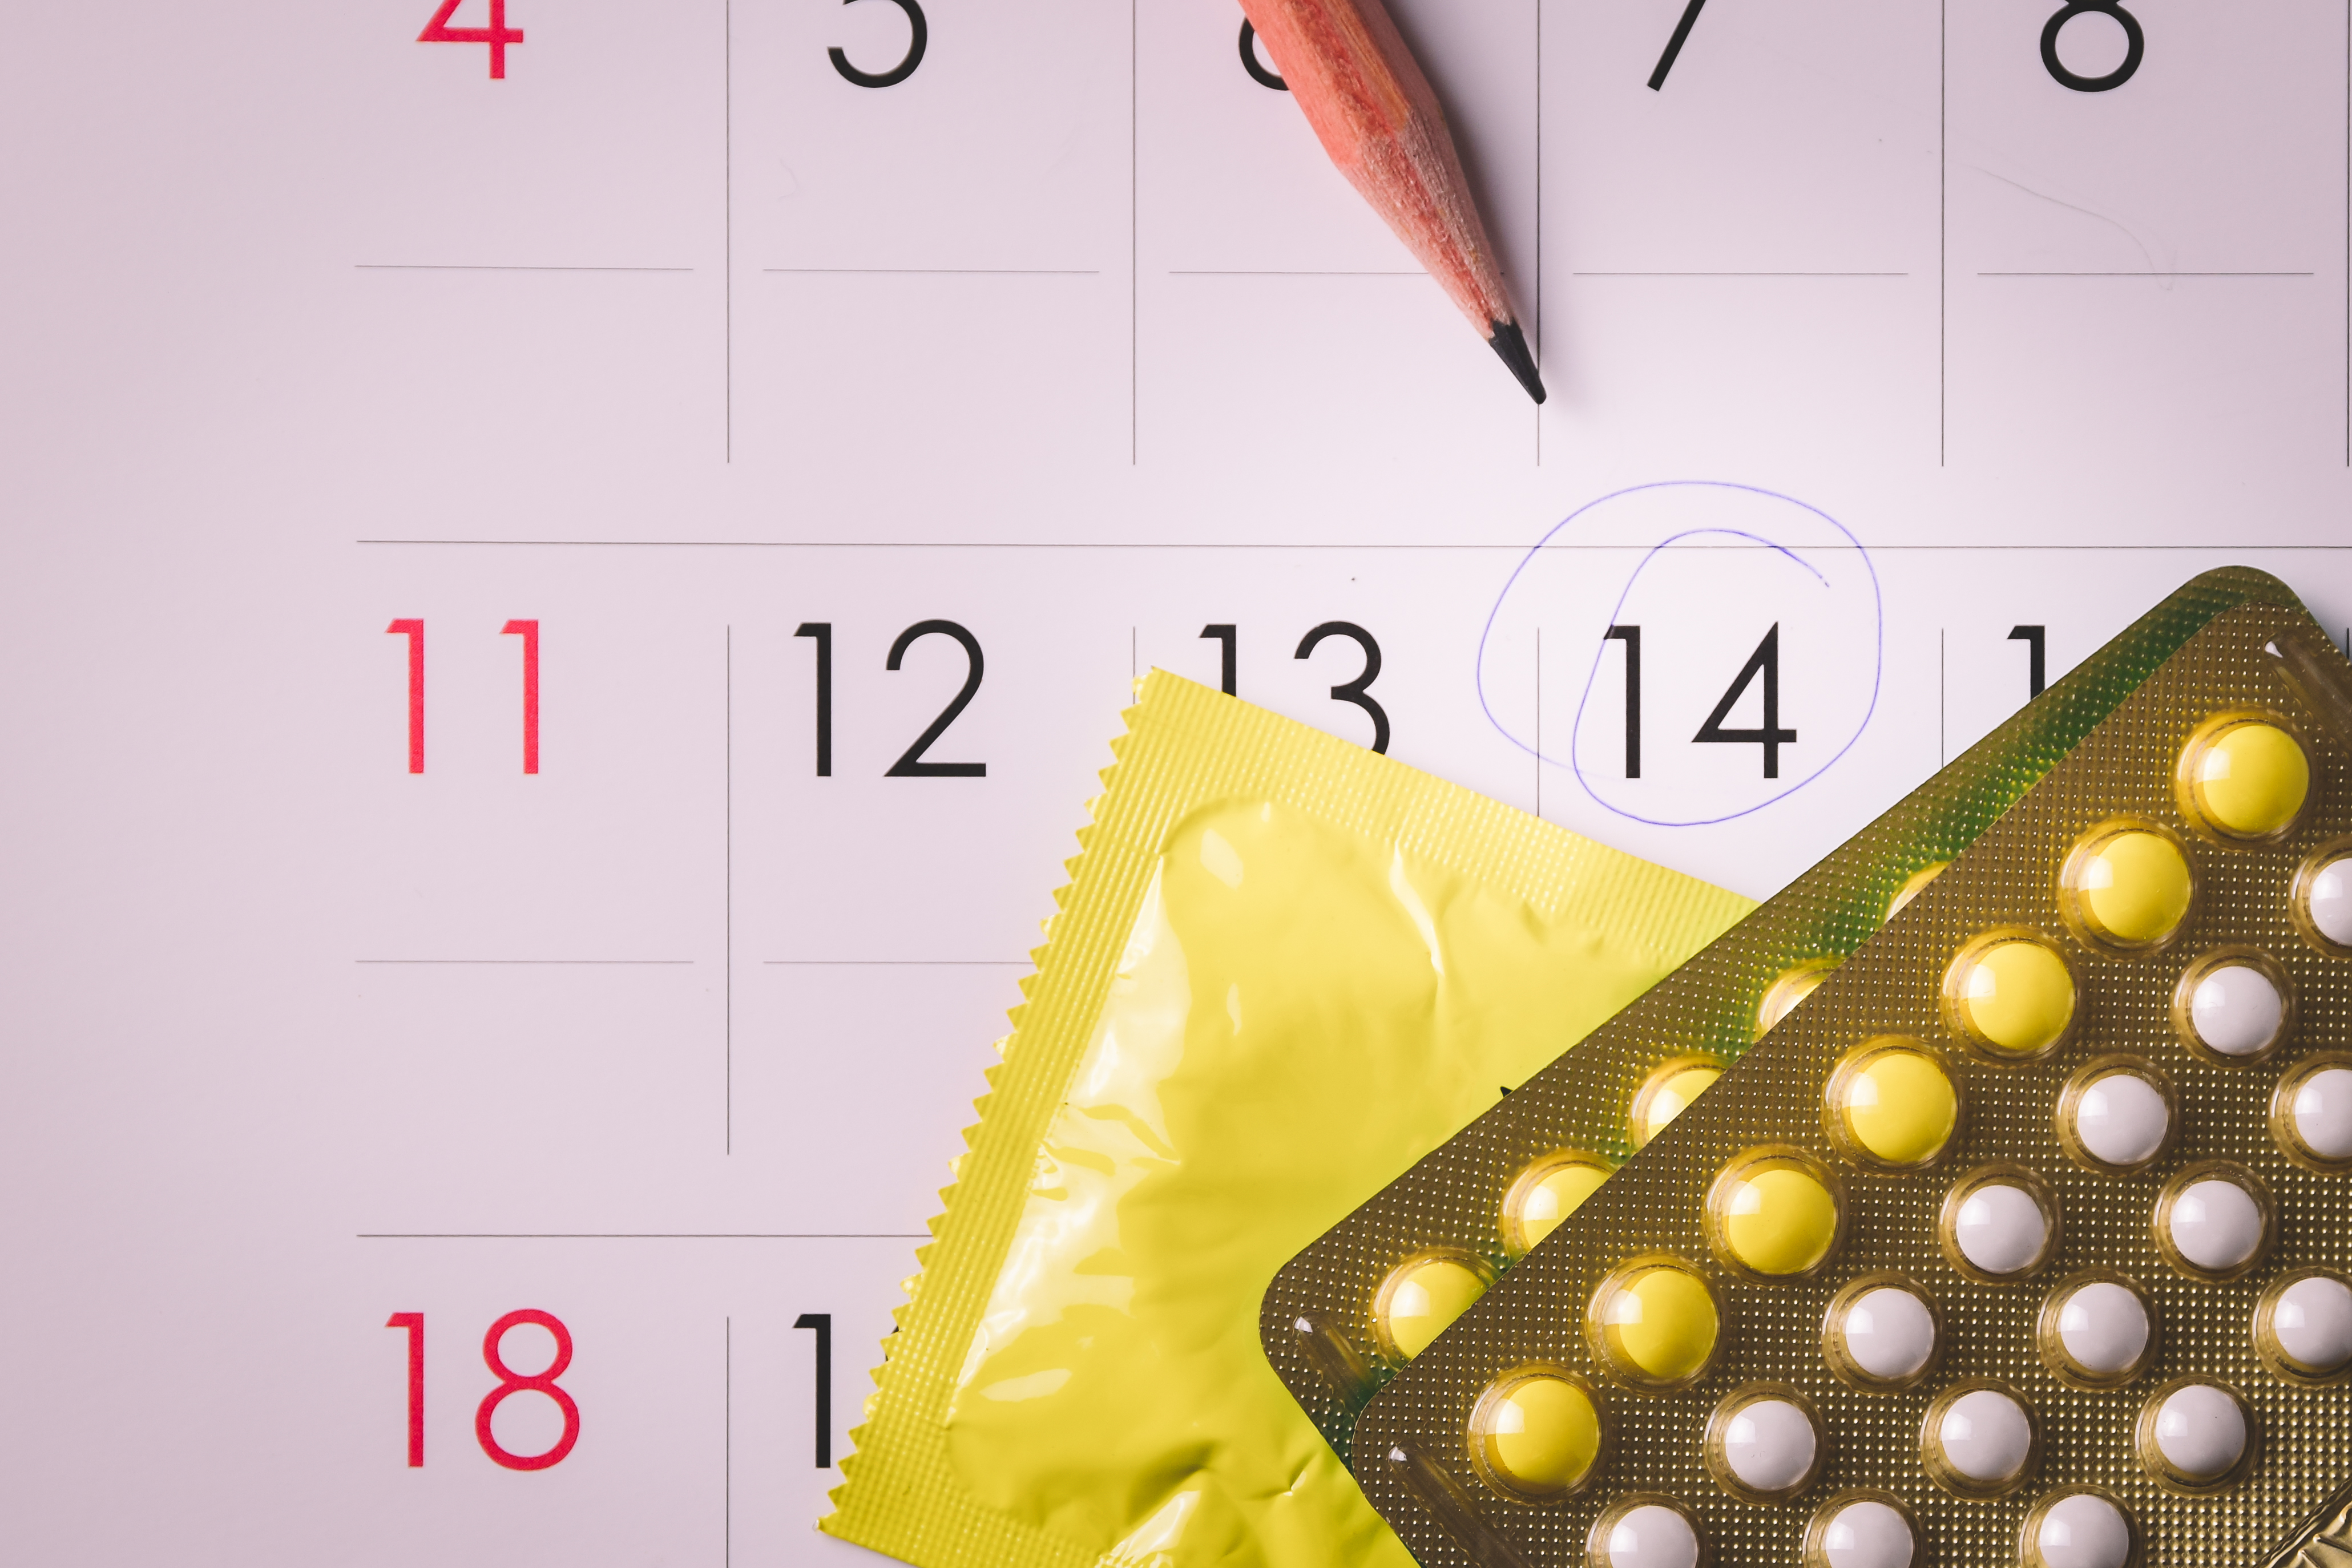 Birth control pills on calendar (add vignette tone)